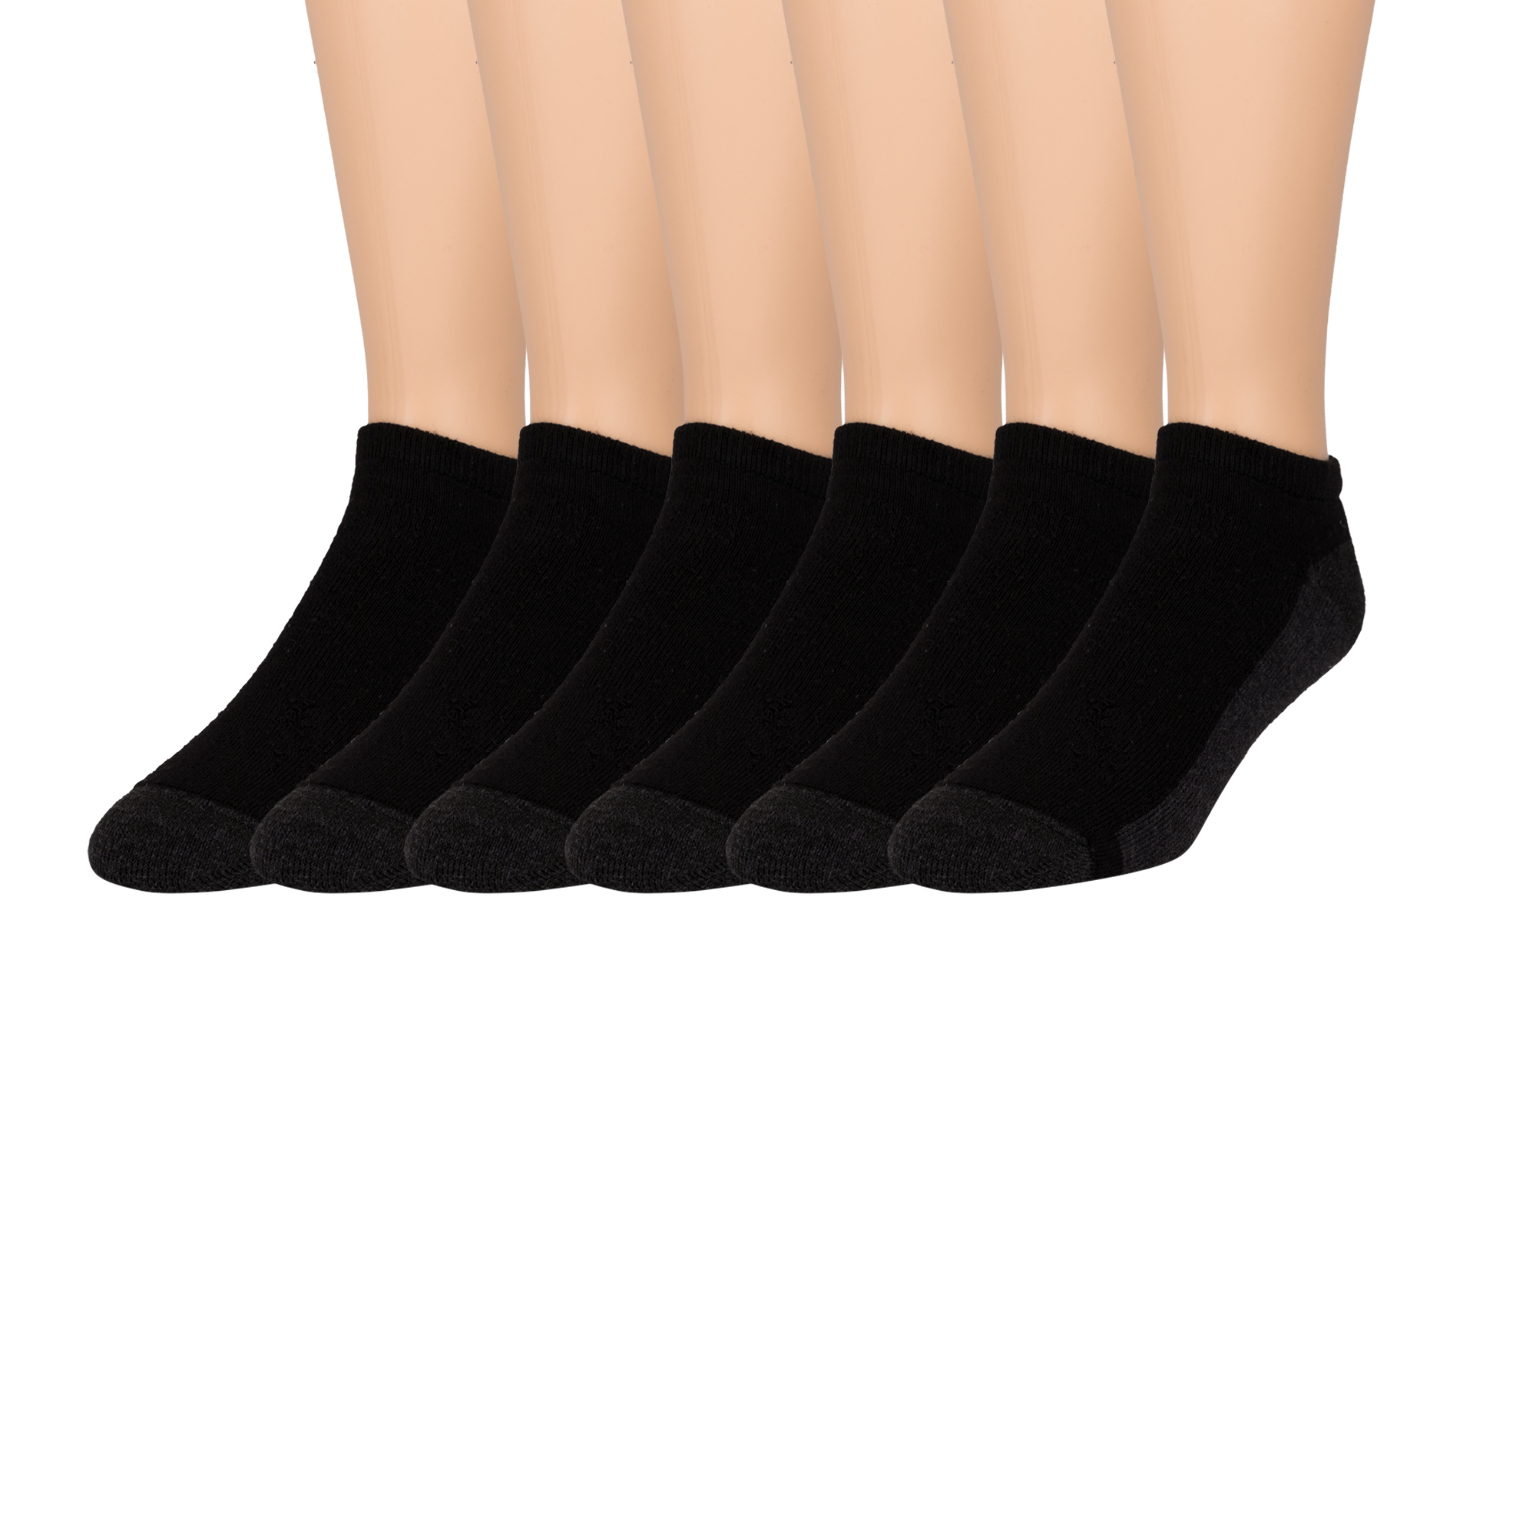 Wholesale Hanes Slightly Imperfect Men's No-Show Socks - Black